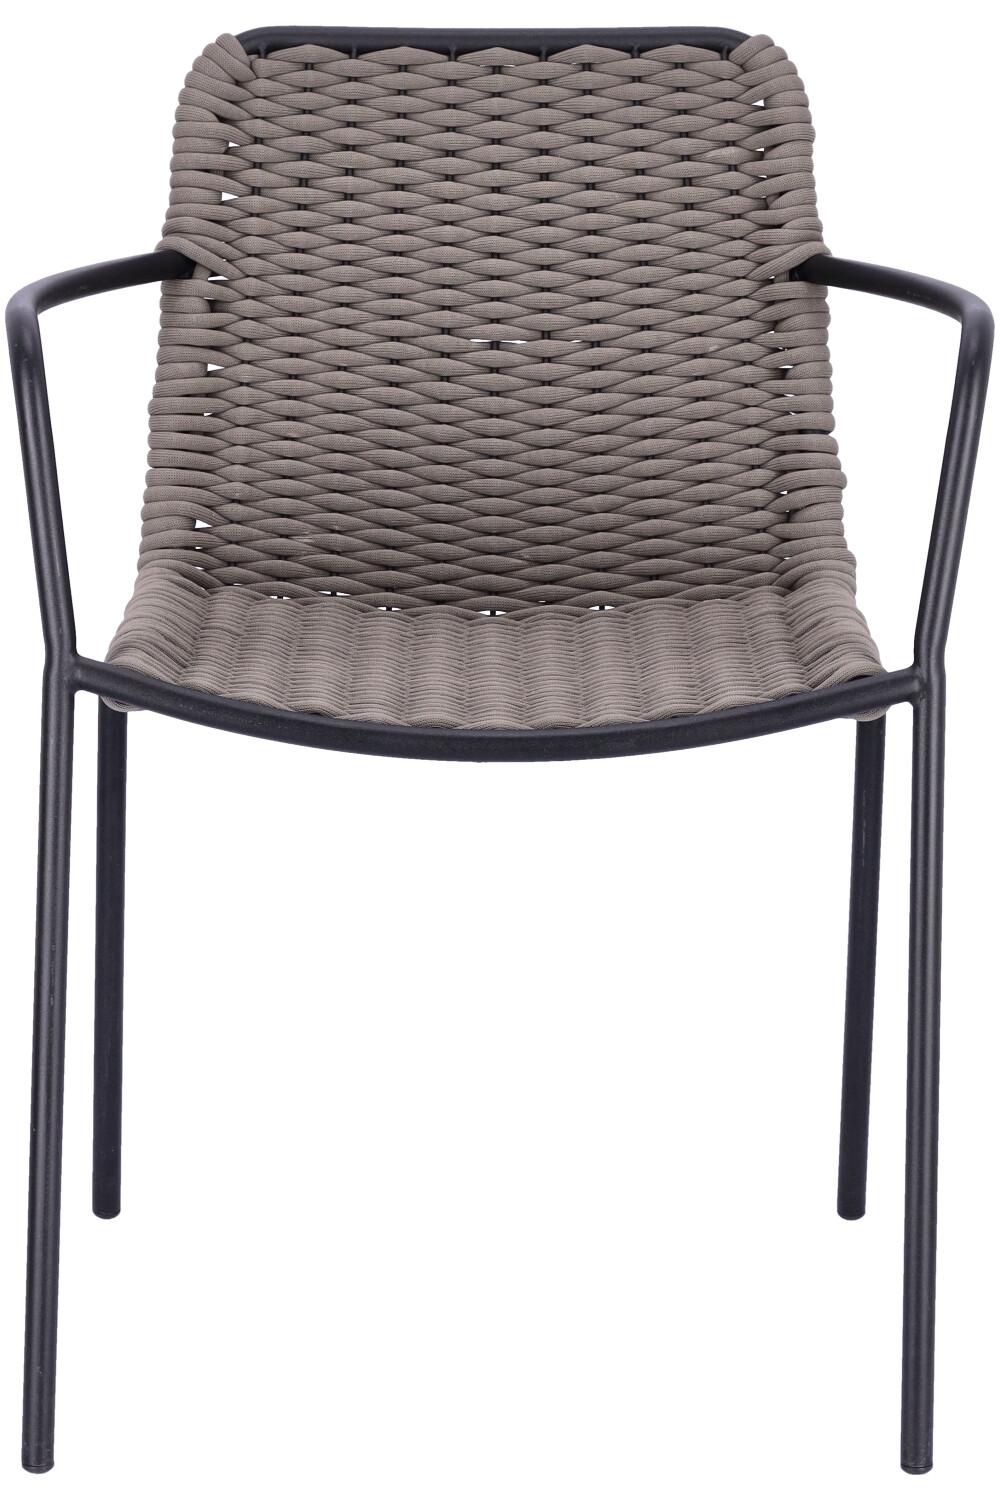 Abbildung arm chair Joakim Vorderansicht